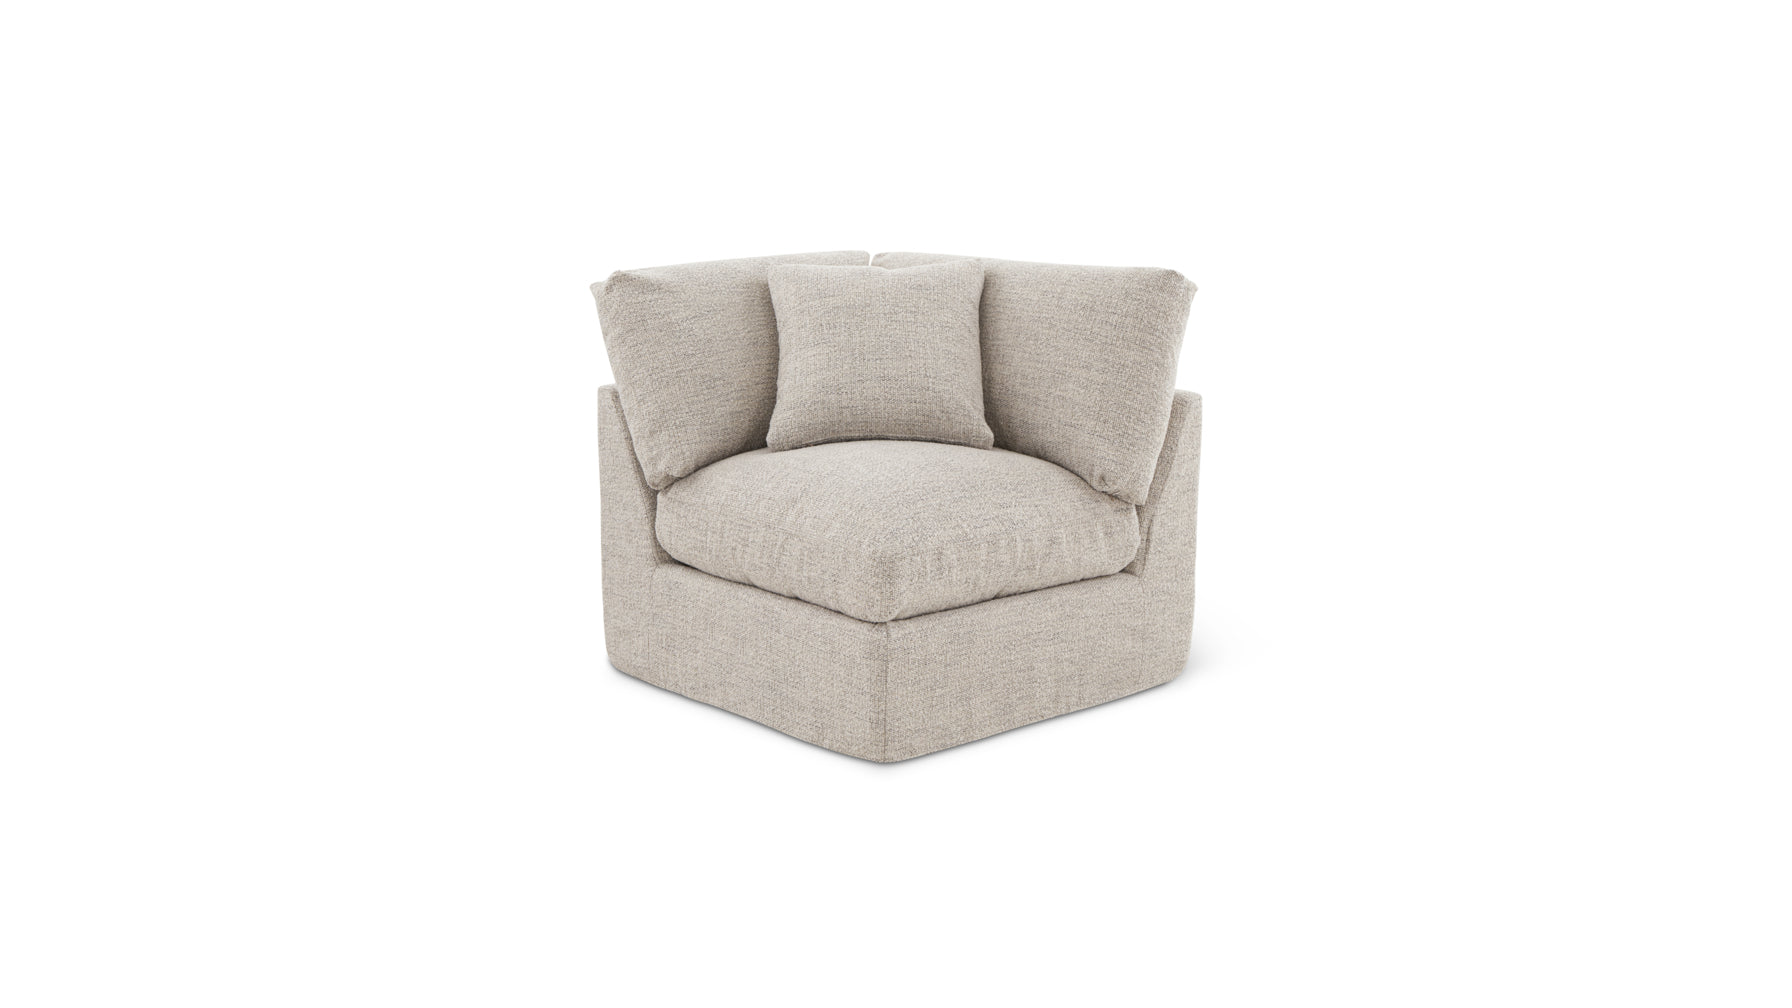 Get Together™ Corner Chair, Standard, Oatmeal - Image 4